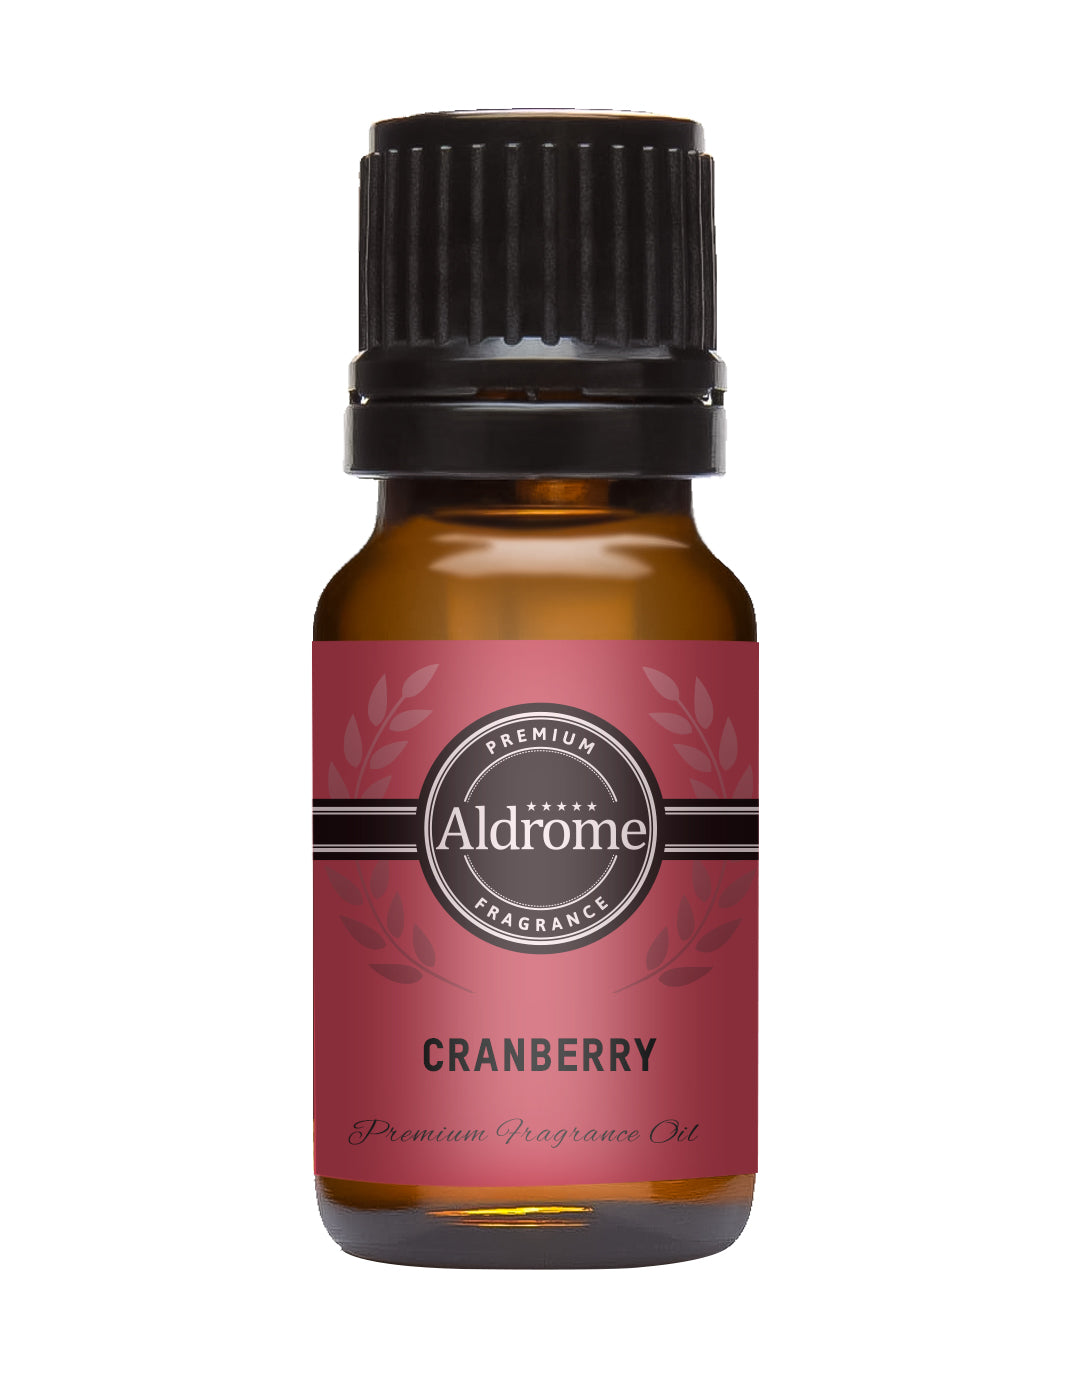 Cranberry Fragrance Oil - 10ml | Buy Cranberry Fragrance Oil | Aldrome Premium Fragrance Oil